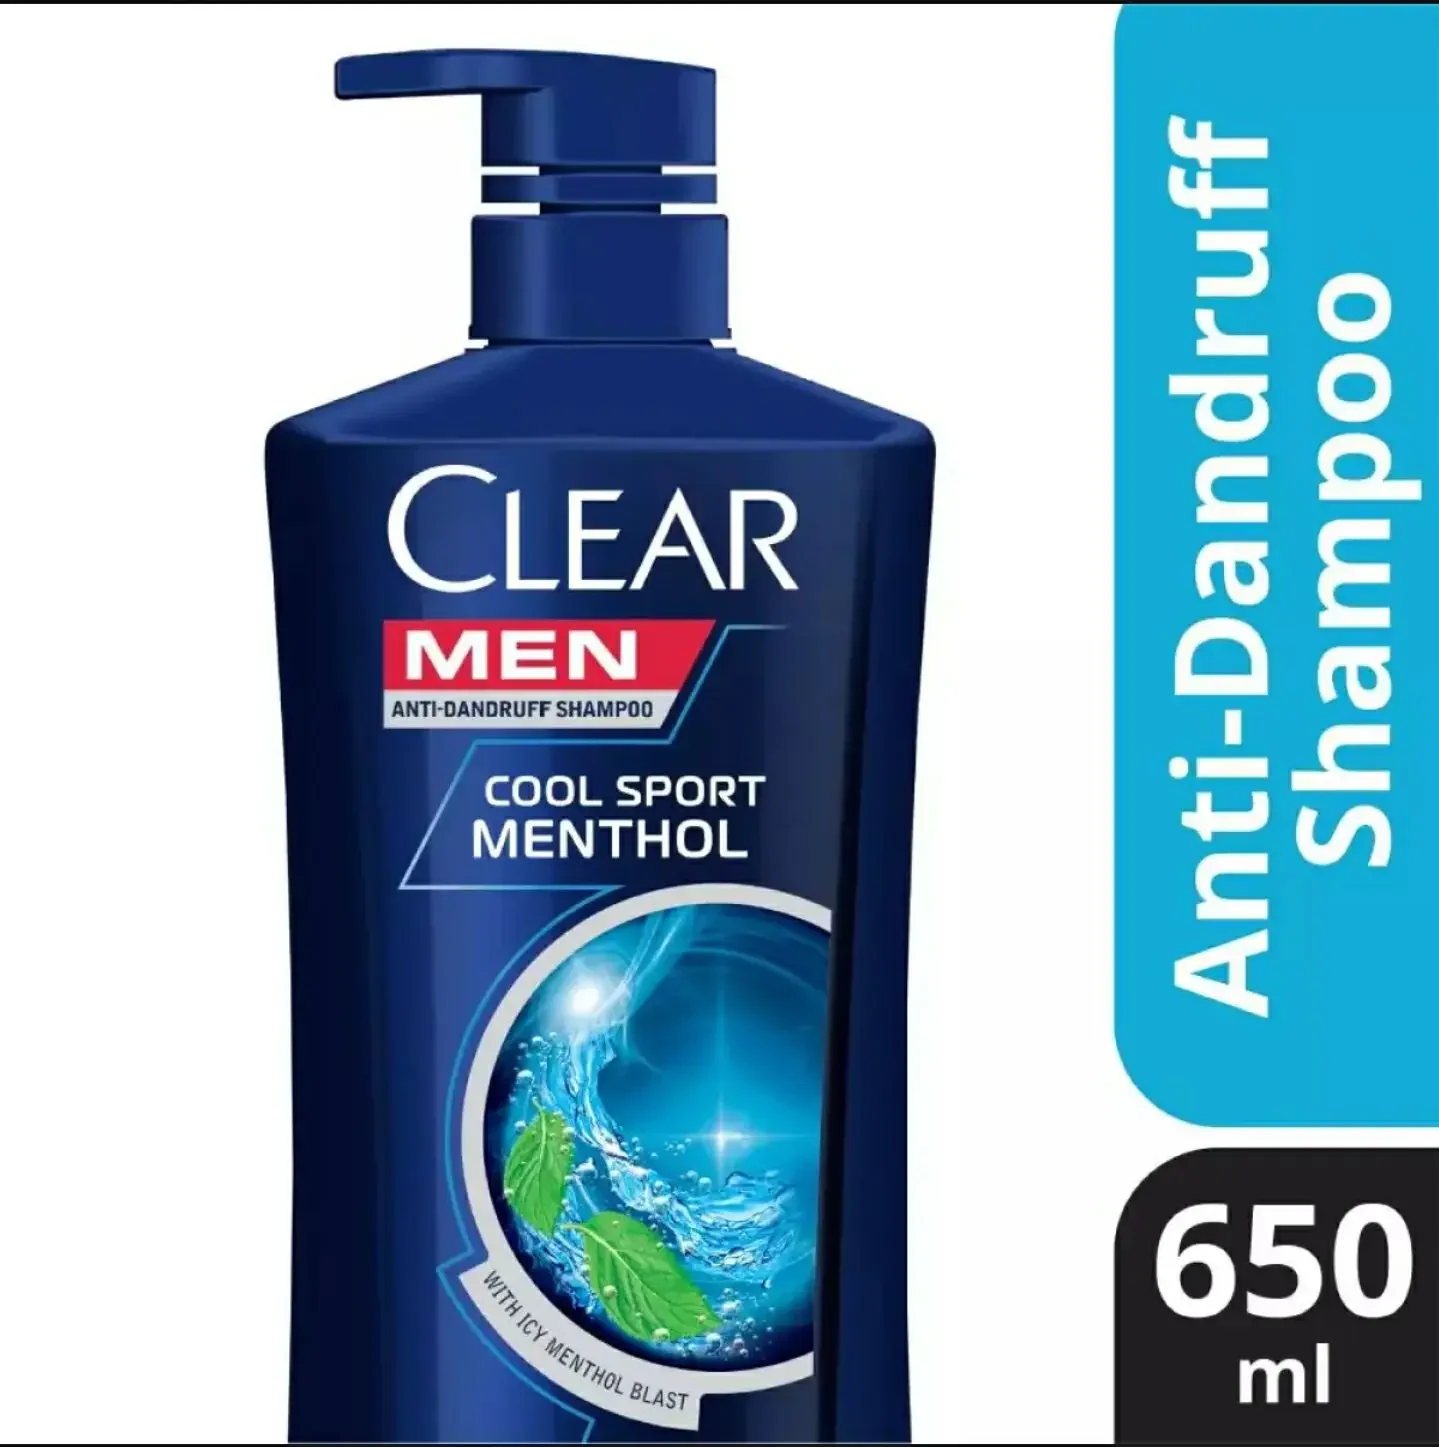 CLEAR MEN SHAMPOO COOL SPORT MENTHOL 650ML